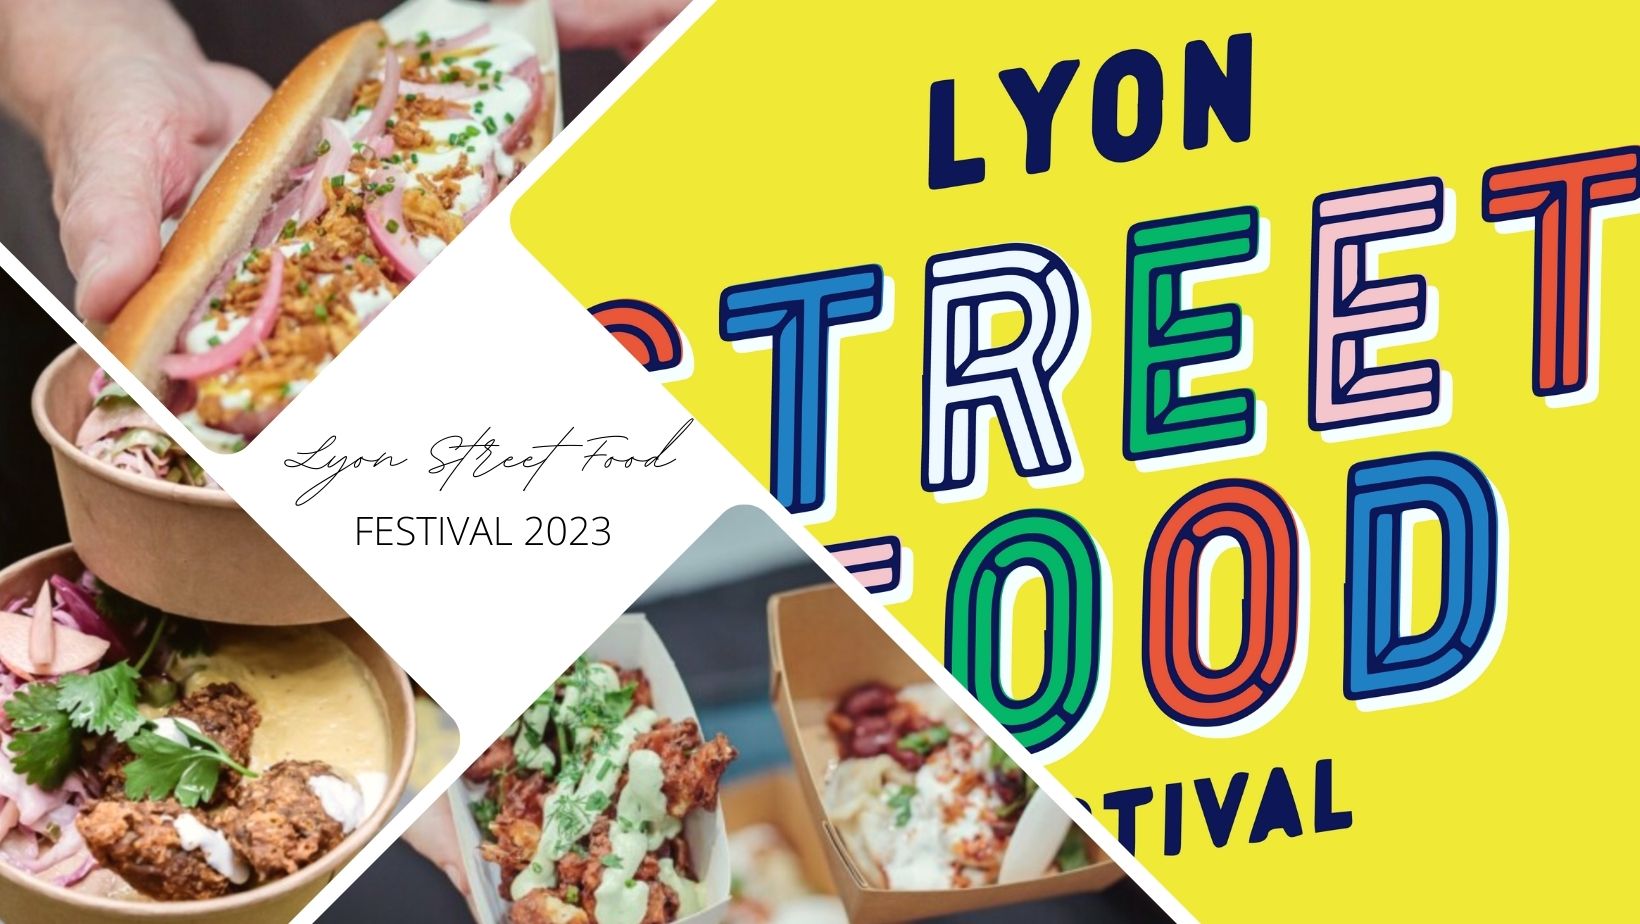 Le Lyon Street Food Festival 2023, premier festival de cuisine de France avec JoeyStarr